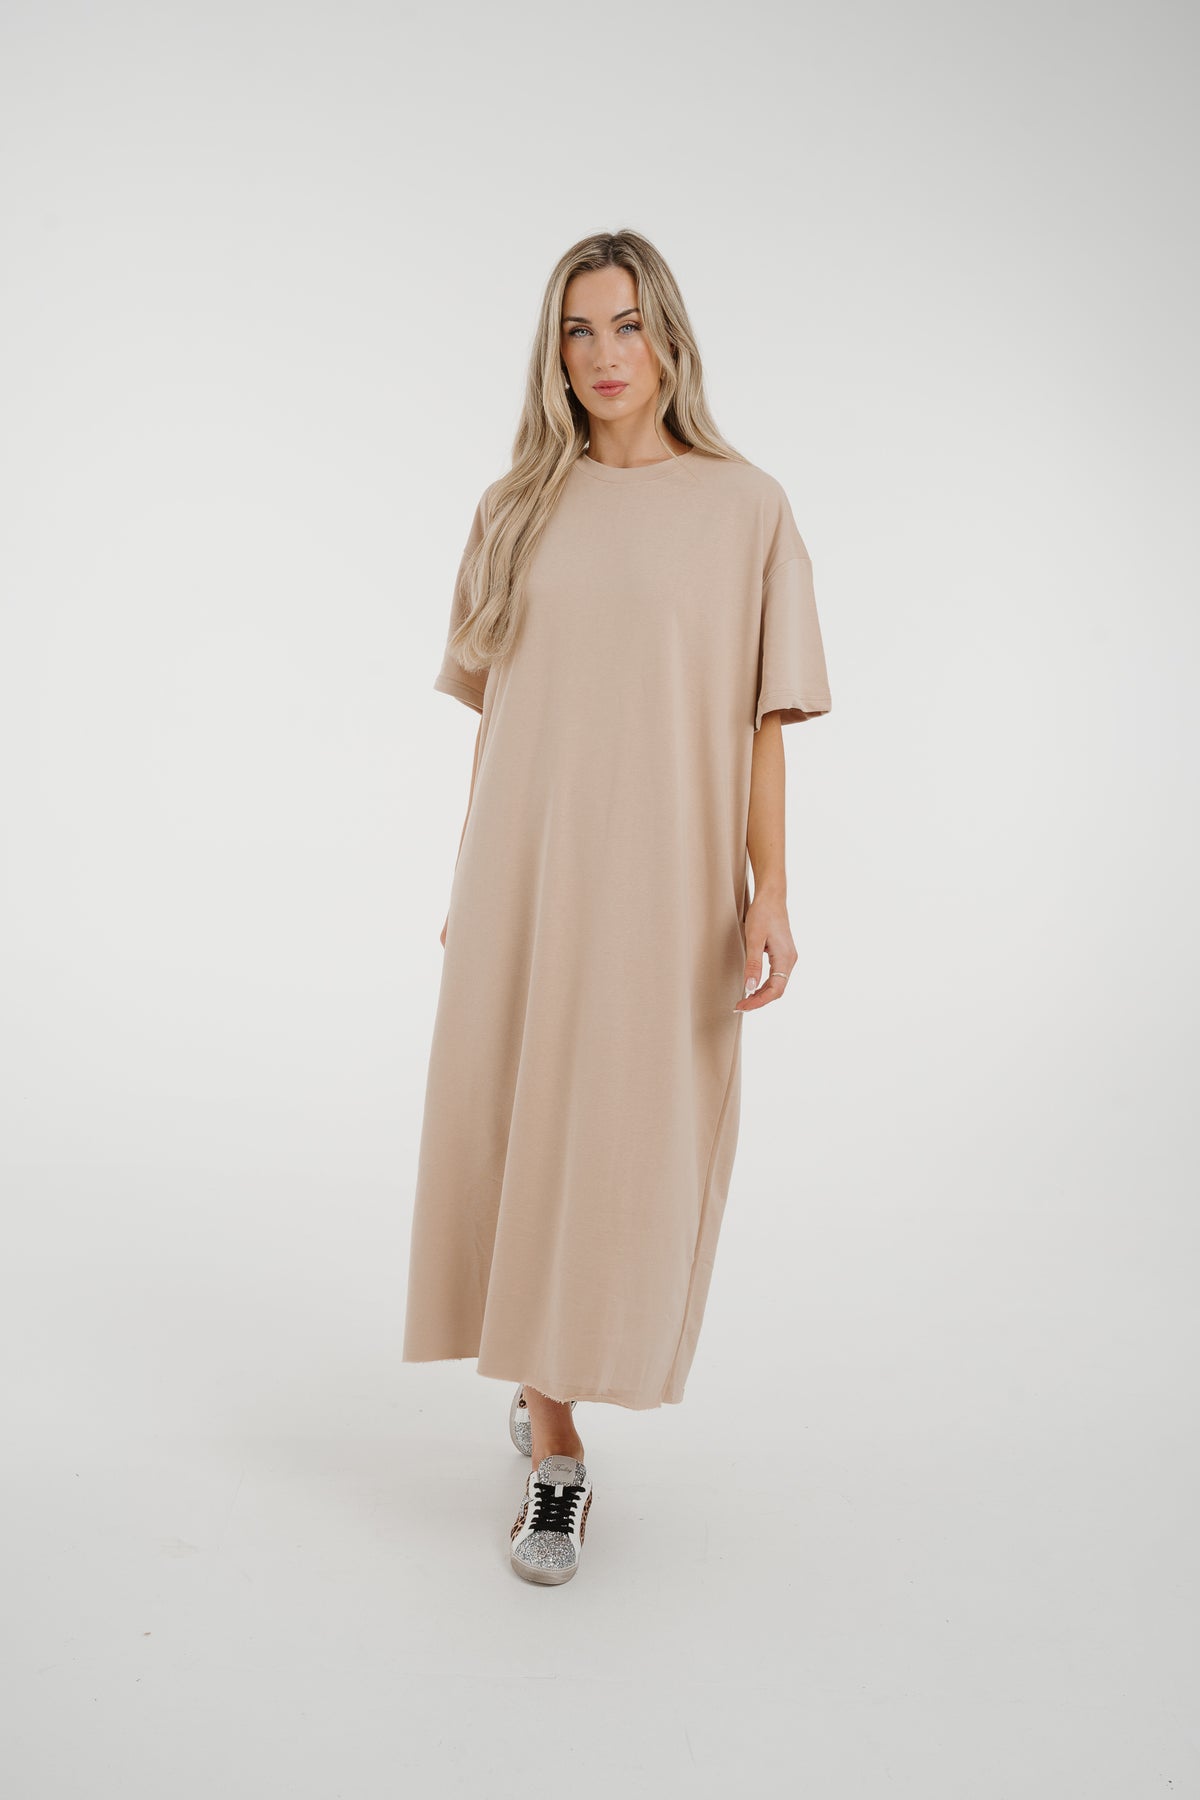 Jane T-Shirt Dress In Camel